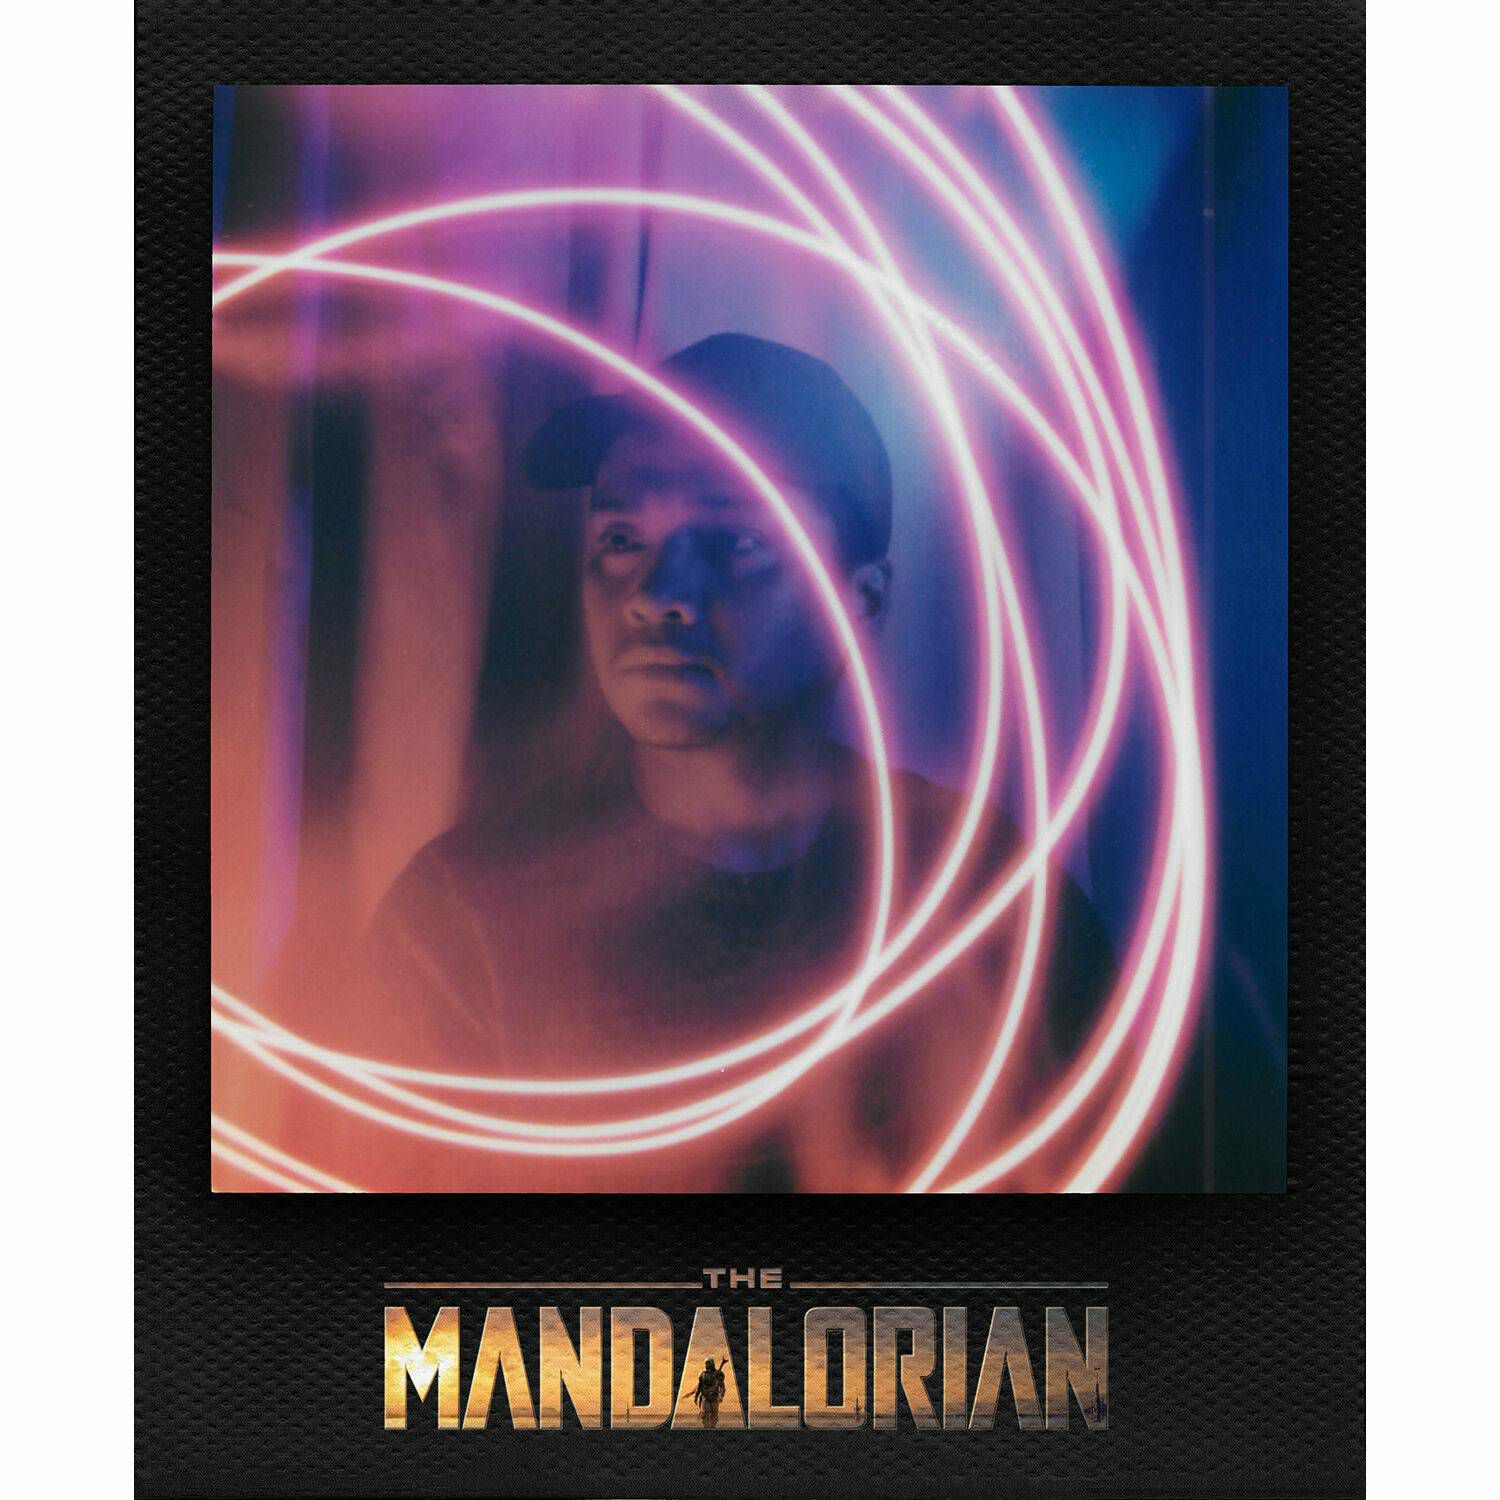 Polaroid Originals Color film i-Type The Mandalorian Edition foto papir za fotografije u boji za Instant fotoaparate (006020)